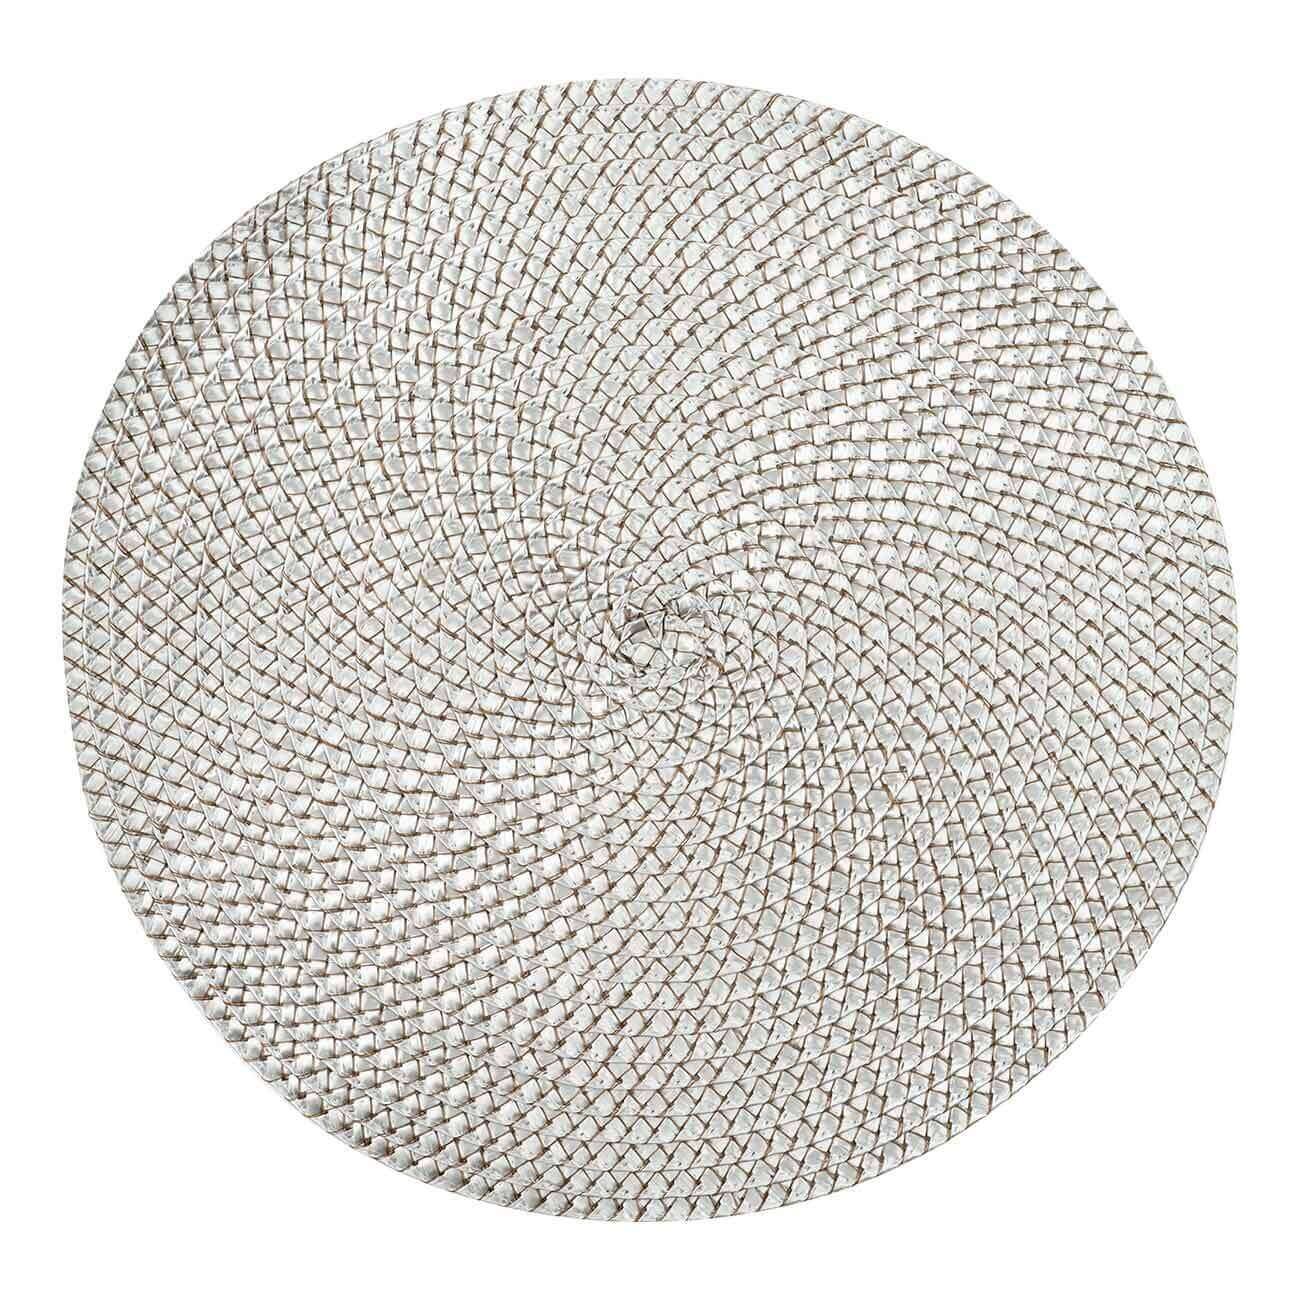 Салфетка под приборы, 38 см, полипропилен/ПЭТ, круглая, серебристая, Circle braid салфетка под приборы 38 см полипропилен пэт круглая светло серая пчелы circle embroidery